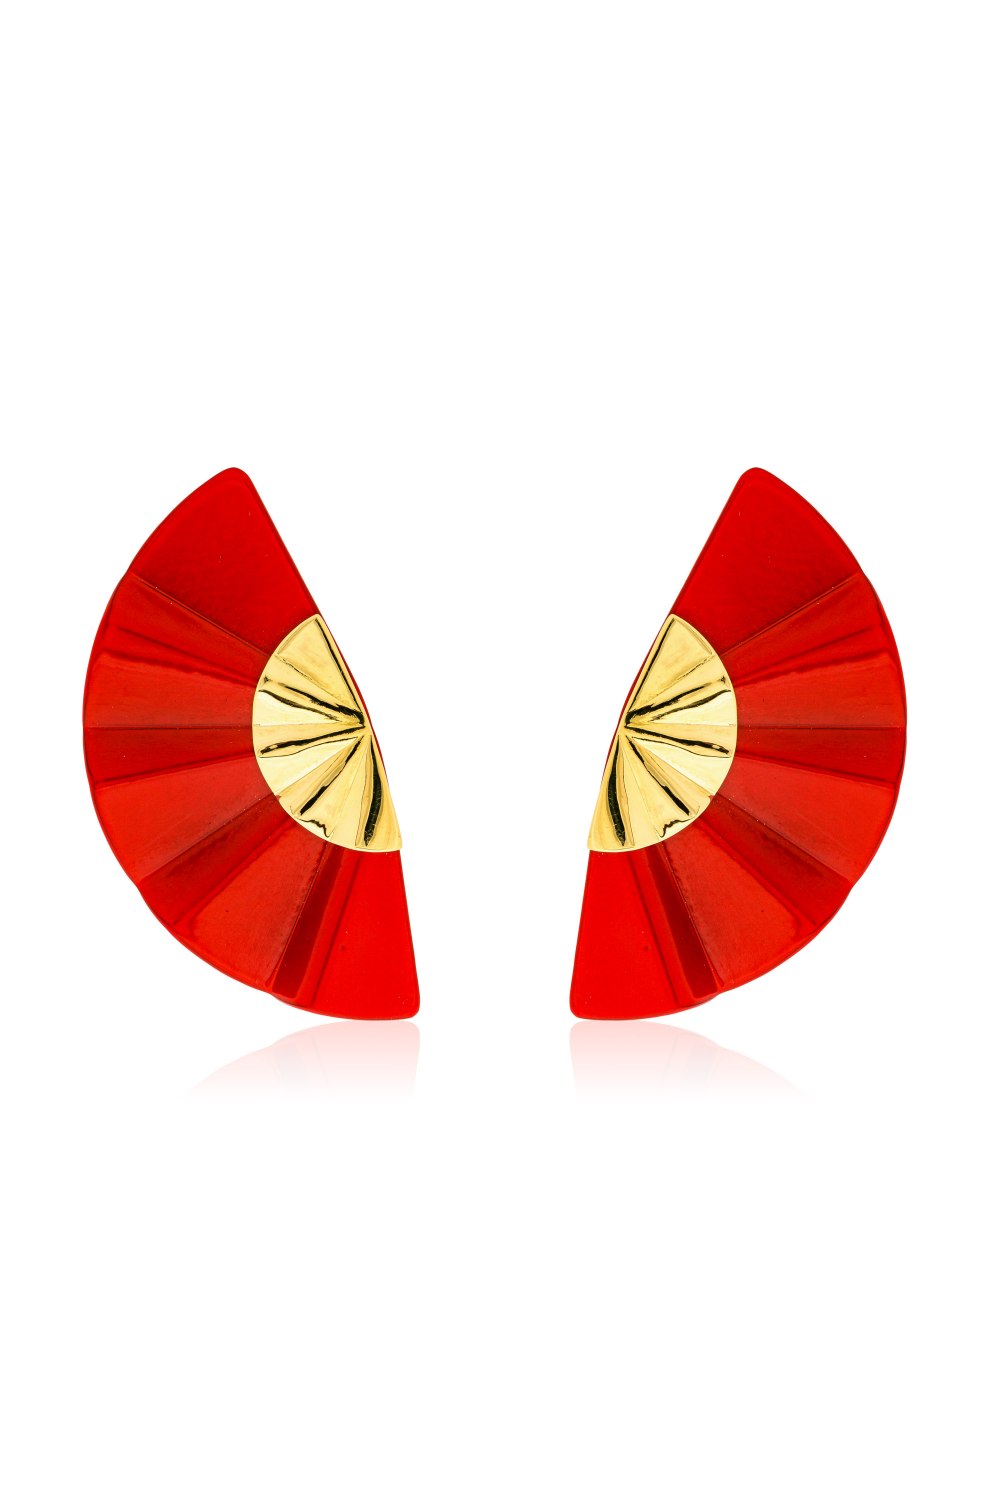 Kessaris-Golden Geisha Red Titanium Earrings